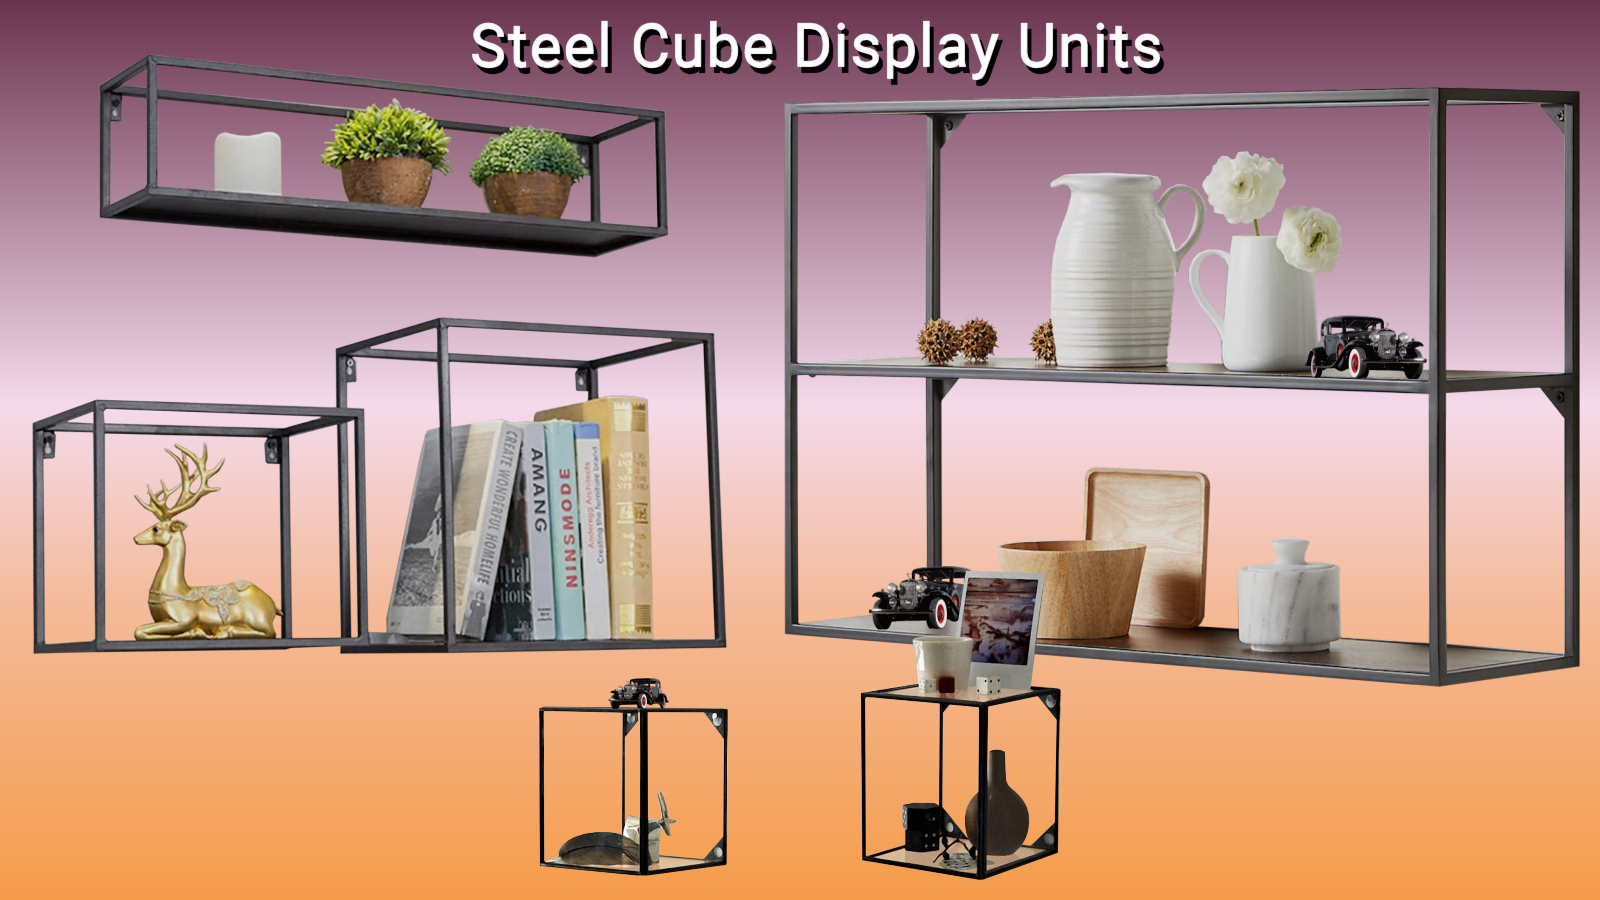 Steel Cube Display Units